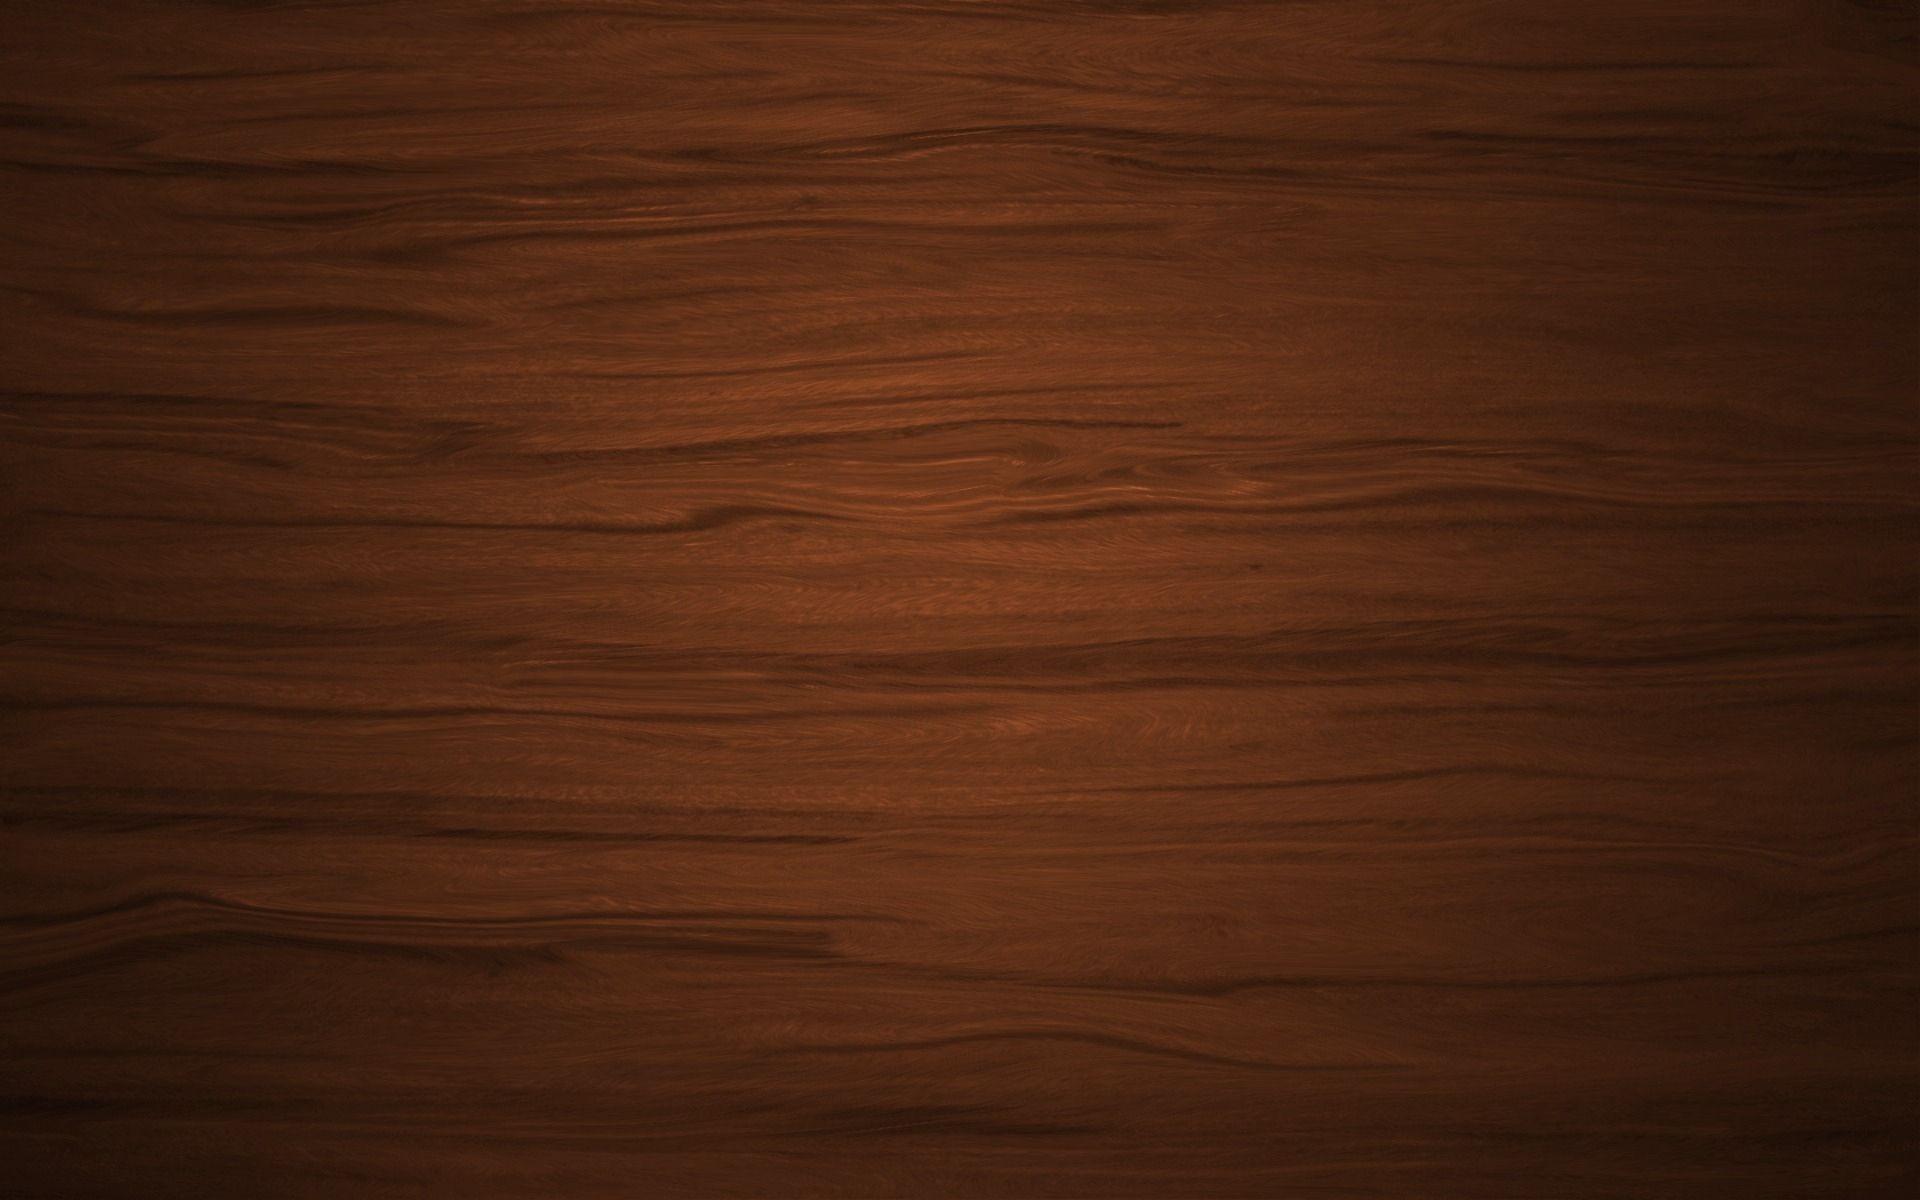 Wood table texture .com